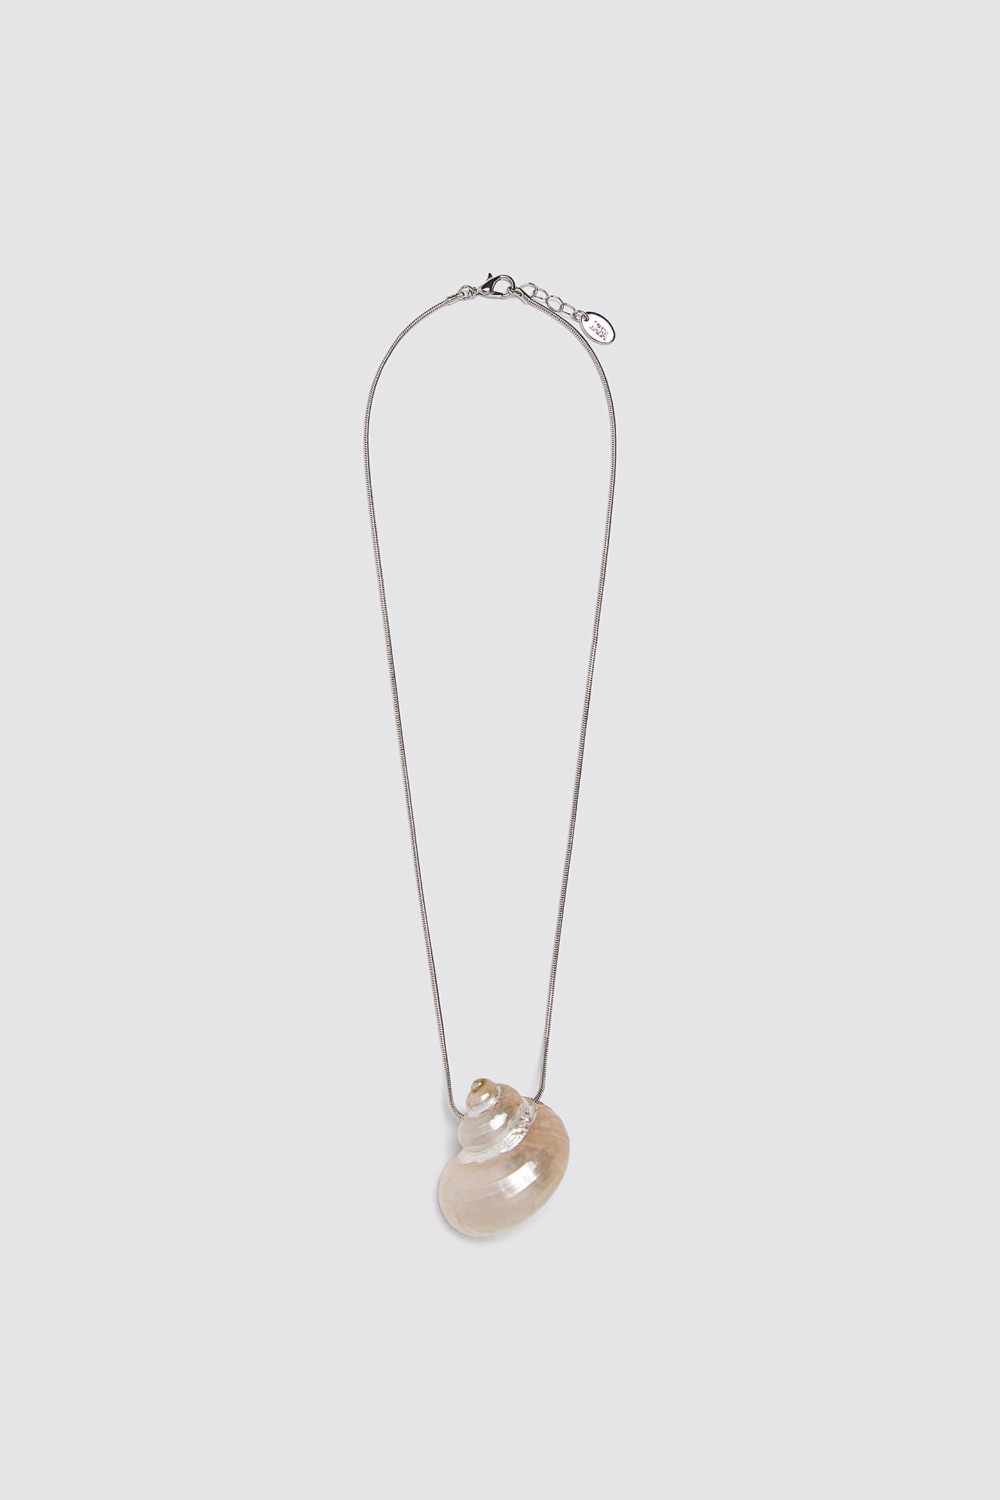 Fashion Blog Mode Tendance Ete 2020 Bijou Jewelry Zara Necklace Collier Silver Argent Coquillage Shell Oversize